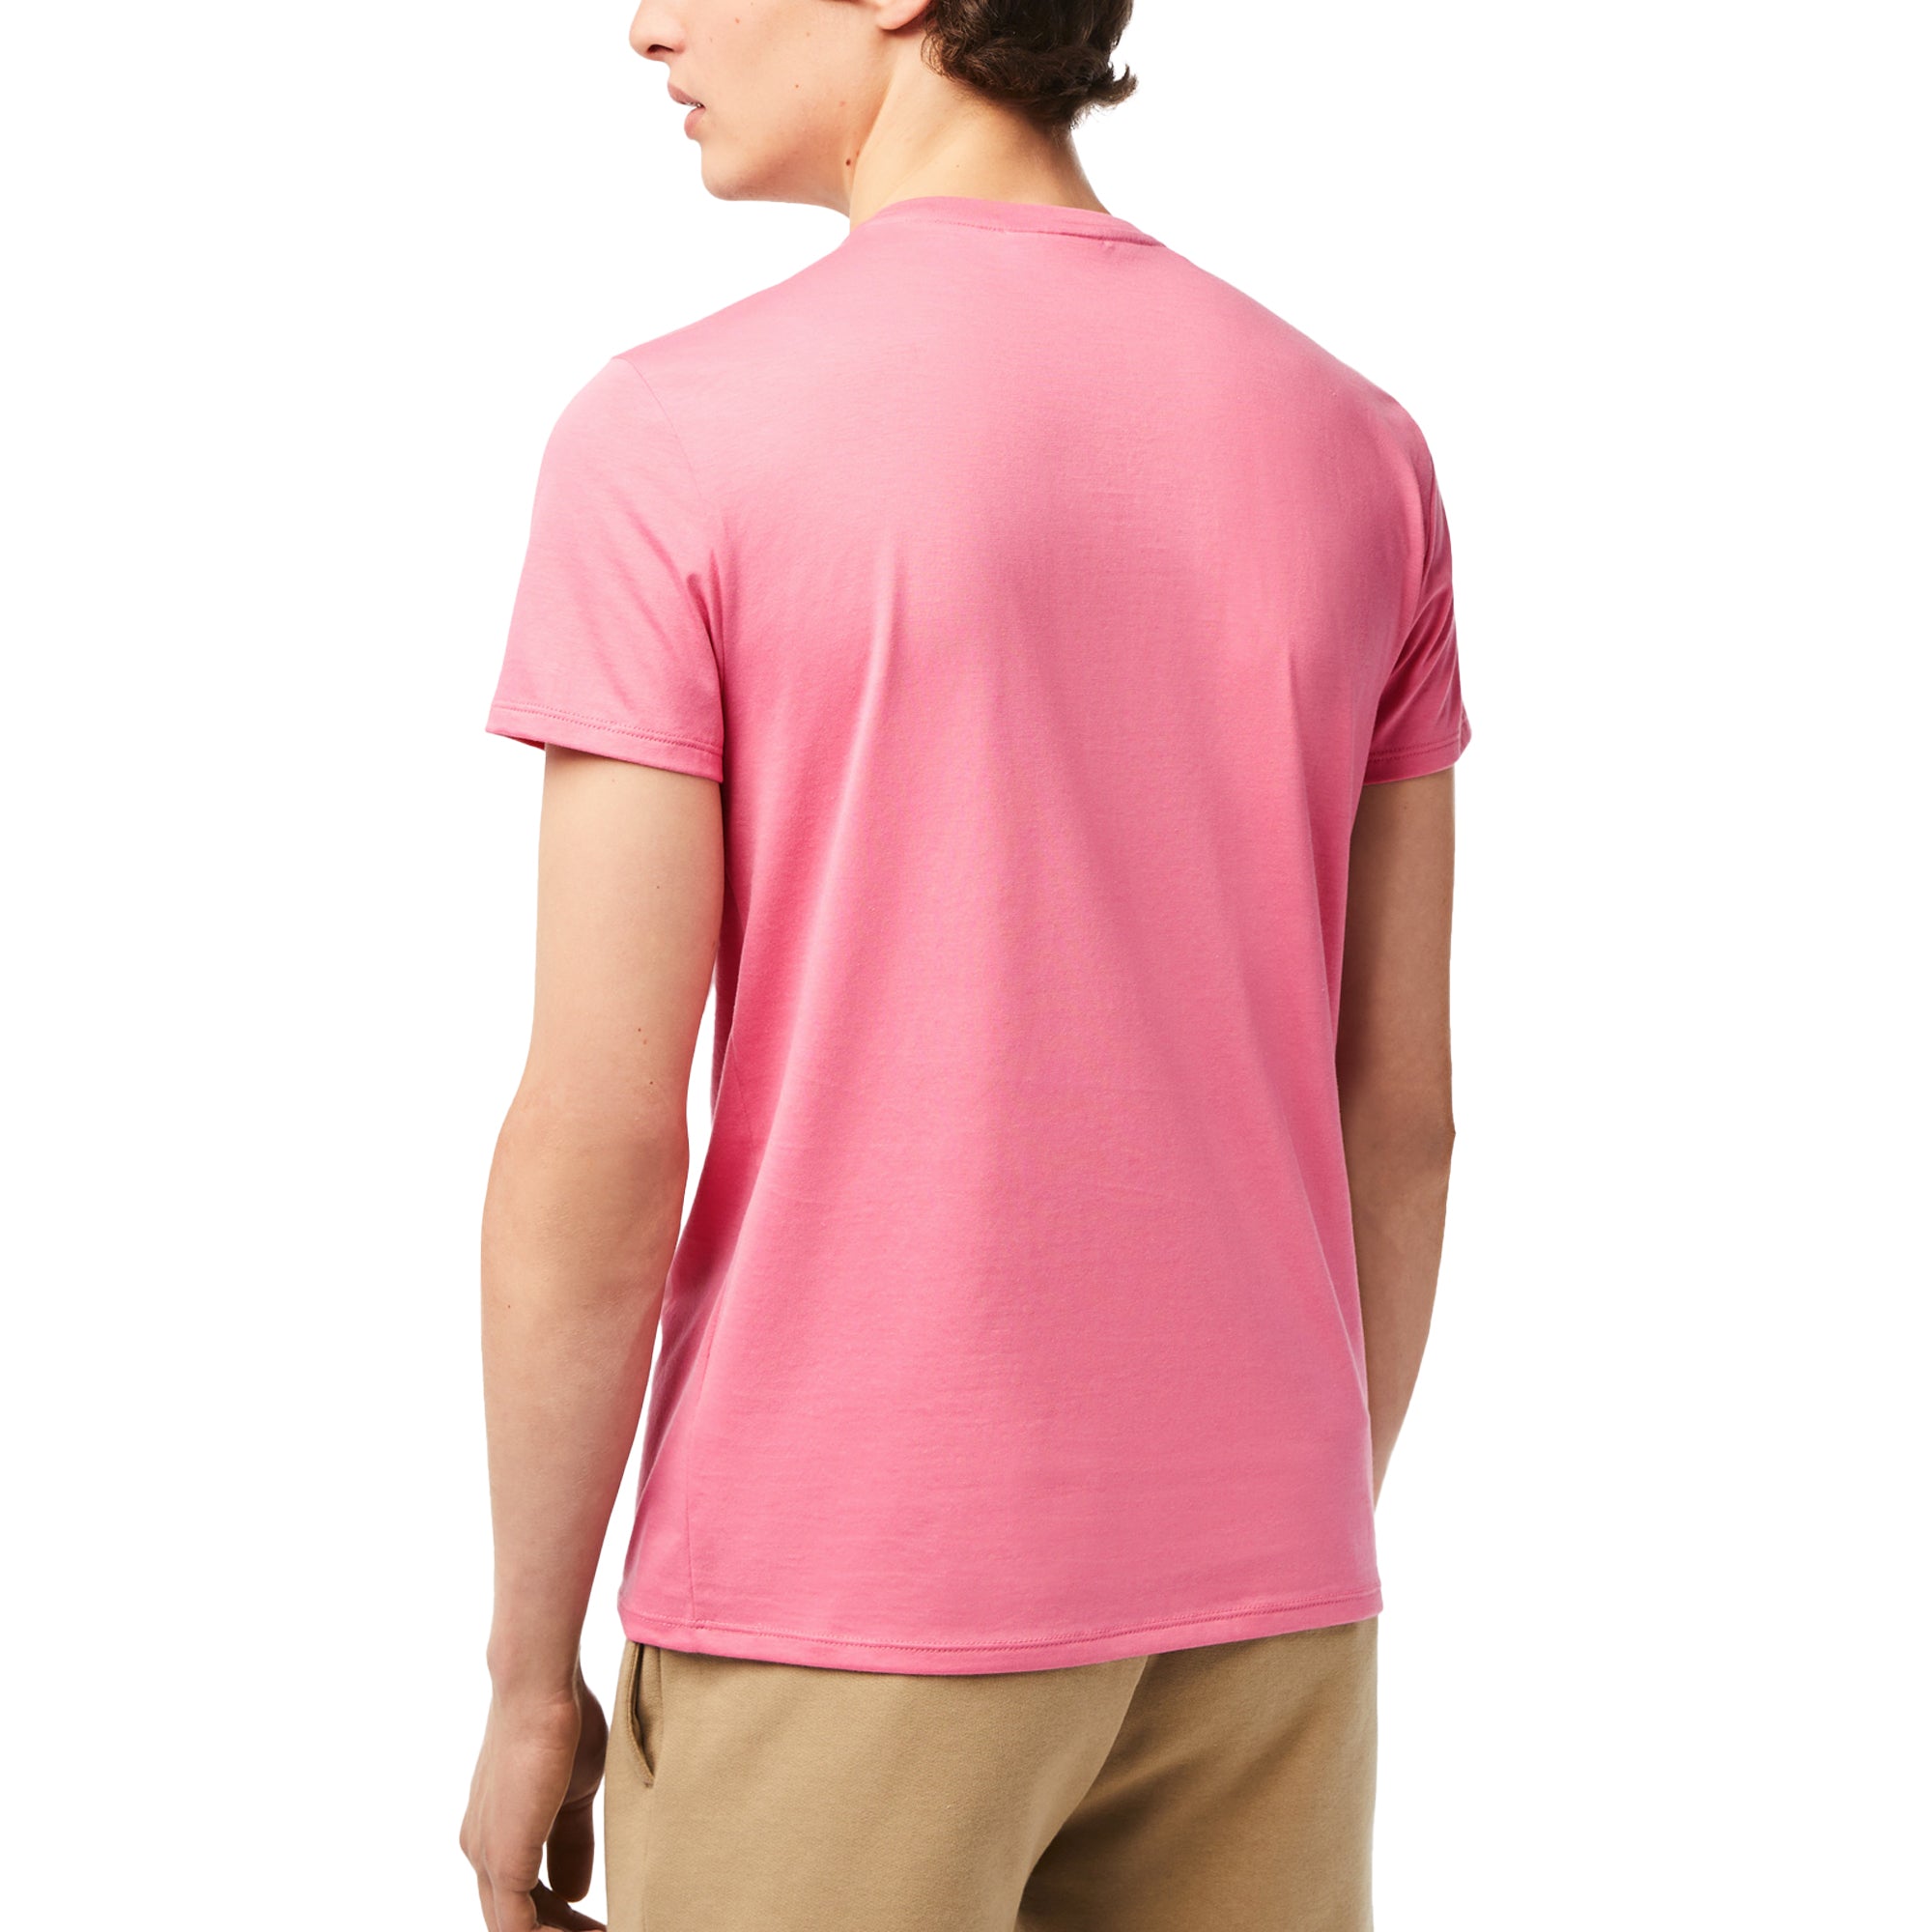 TH6709 Cotton T-Shirt - Lacoste Reseda Pink Pima